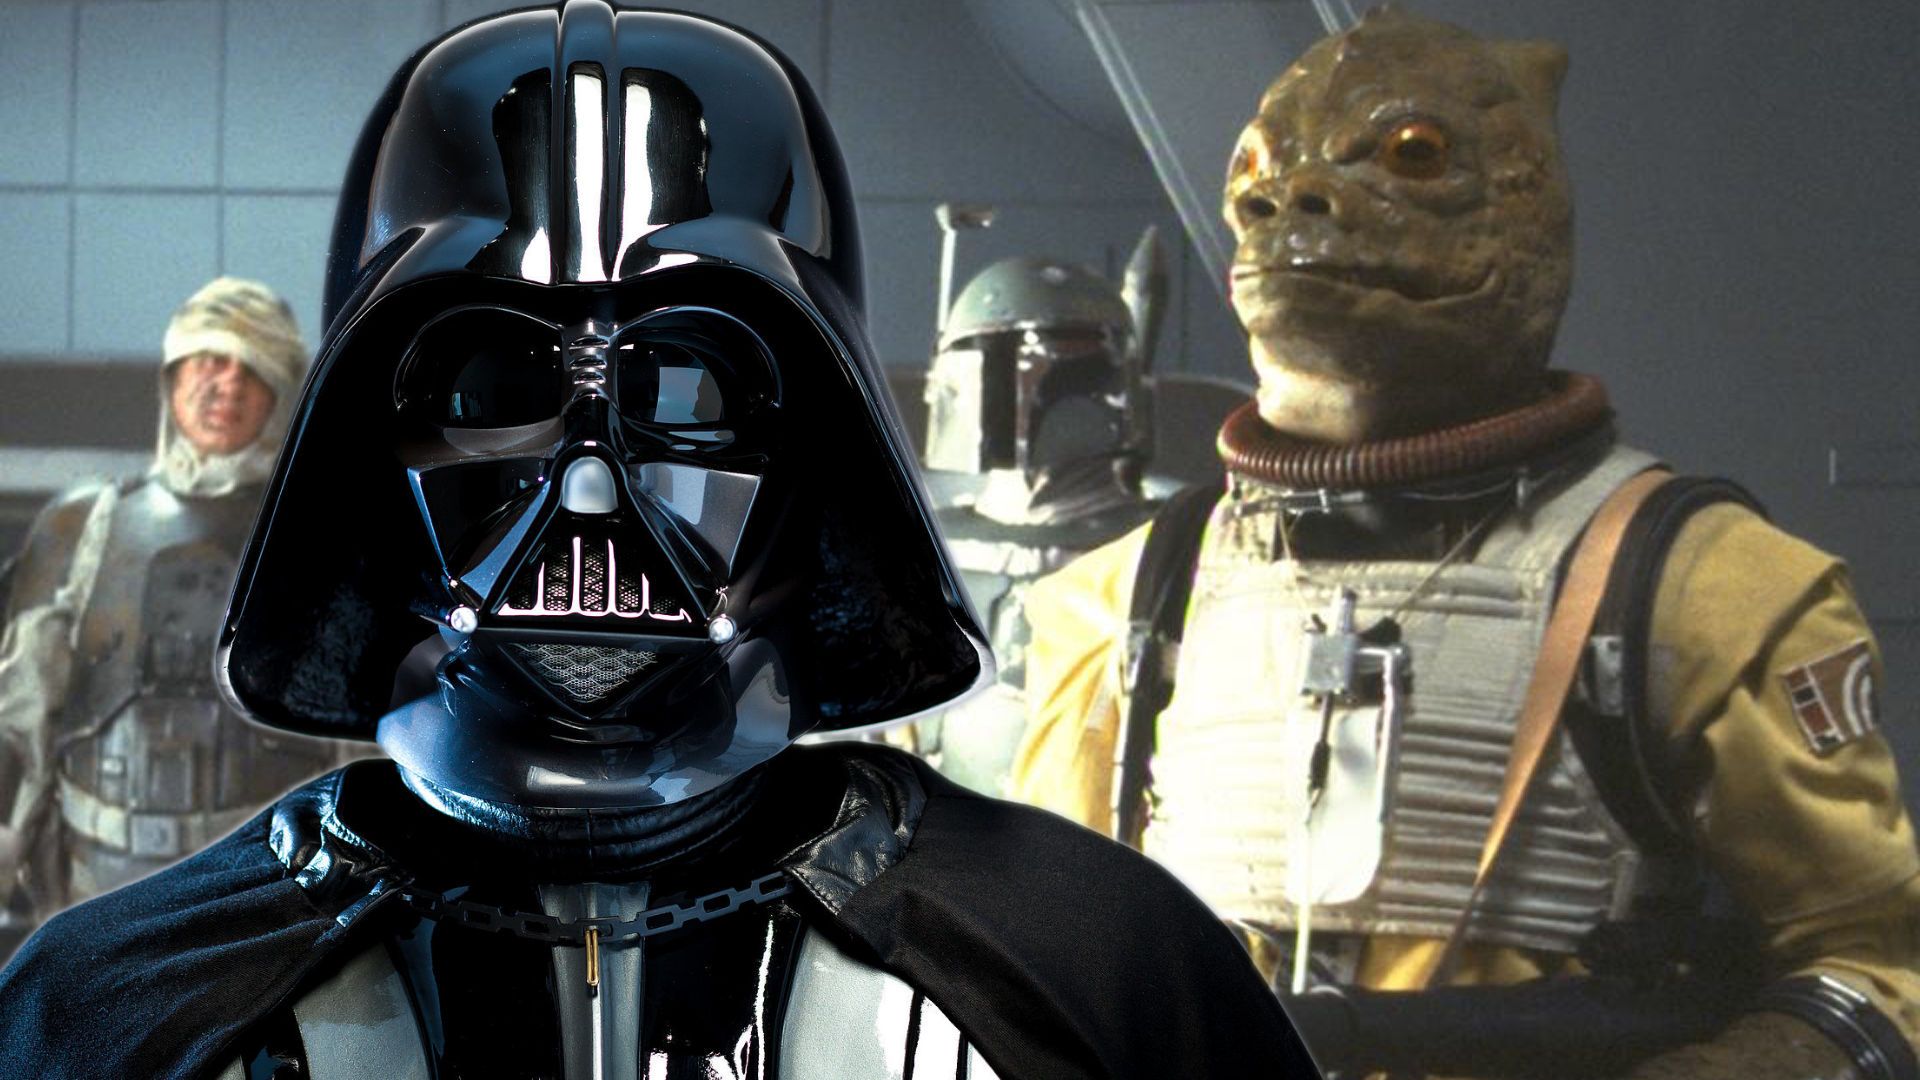 Darth Vader and Empire Strikes Back Bounty Hunters Video Image